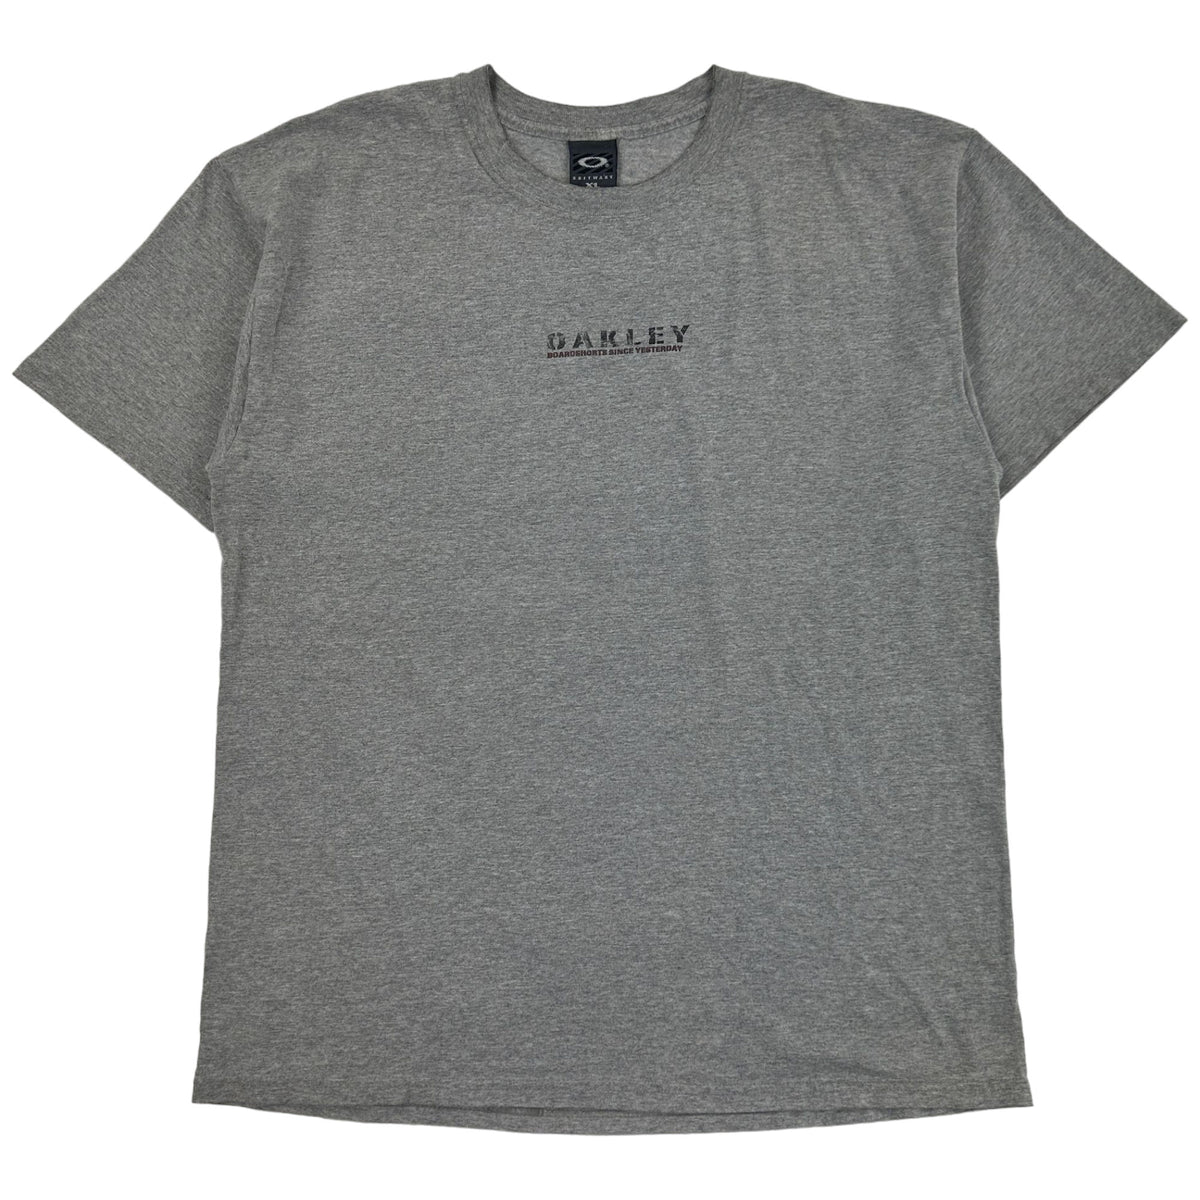 Vintage Oakley Flame Graphic T-Shirt Size XL